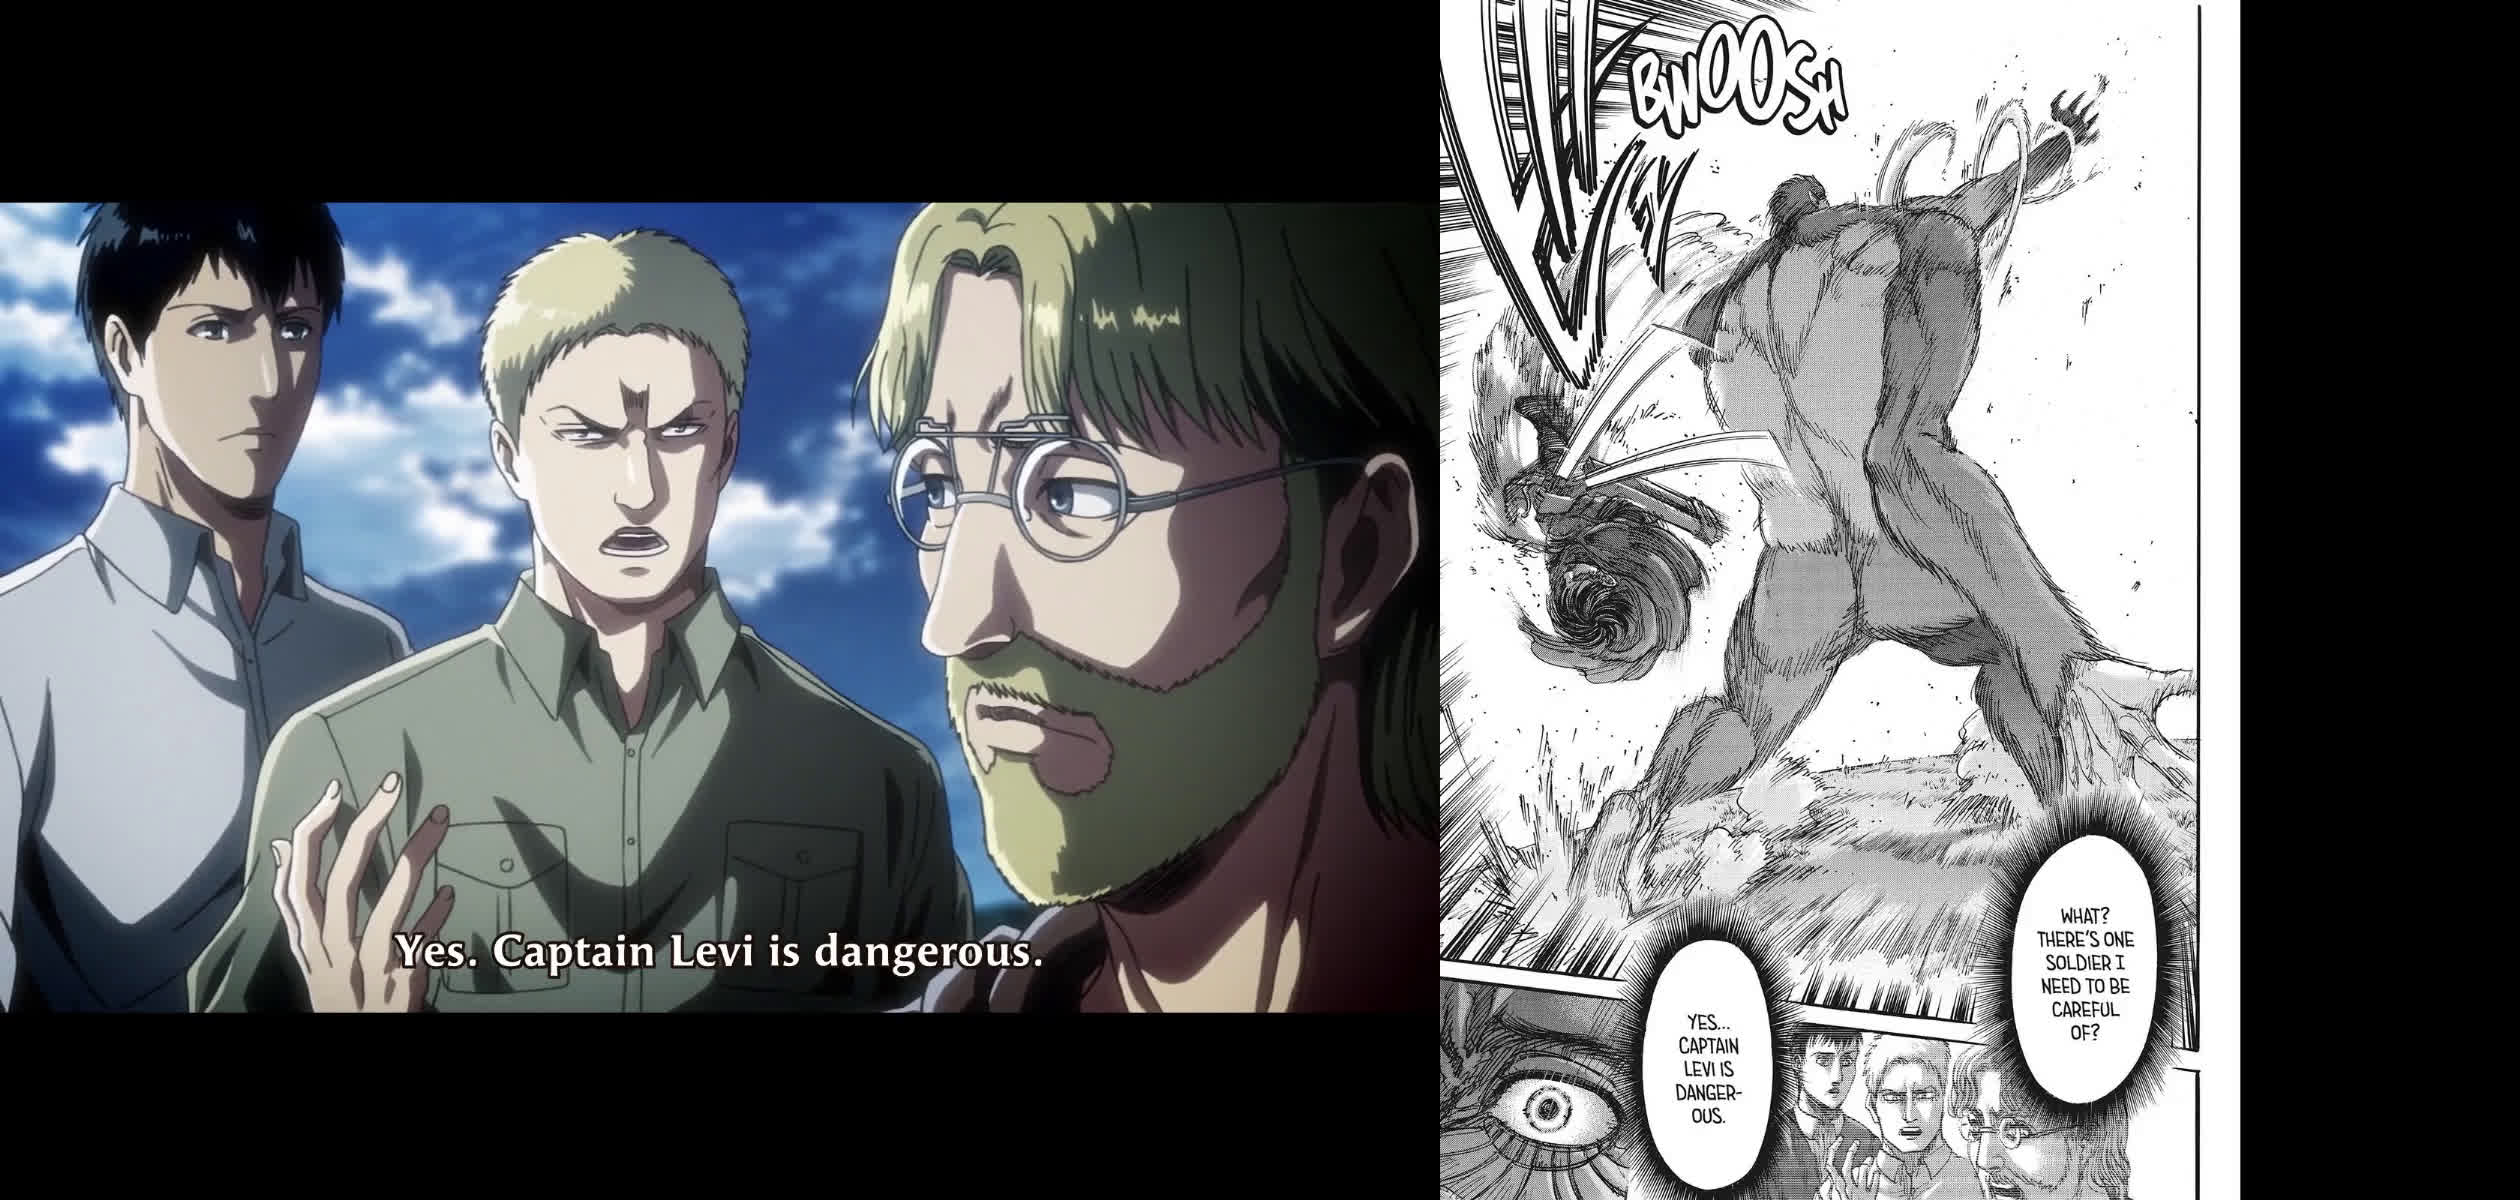 Attack on Titan Season 3 Part 2 - Episode 5/Chapter 81] Anime vs. Manga  side-by-side comparison (Full scene)